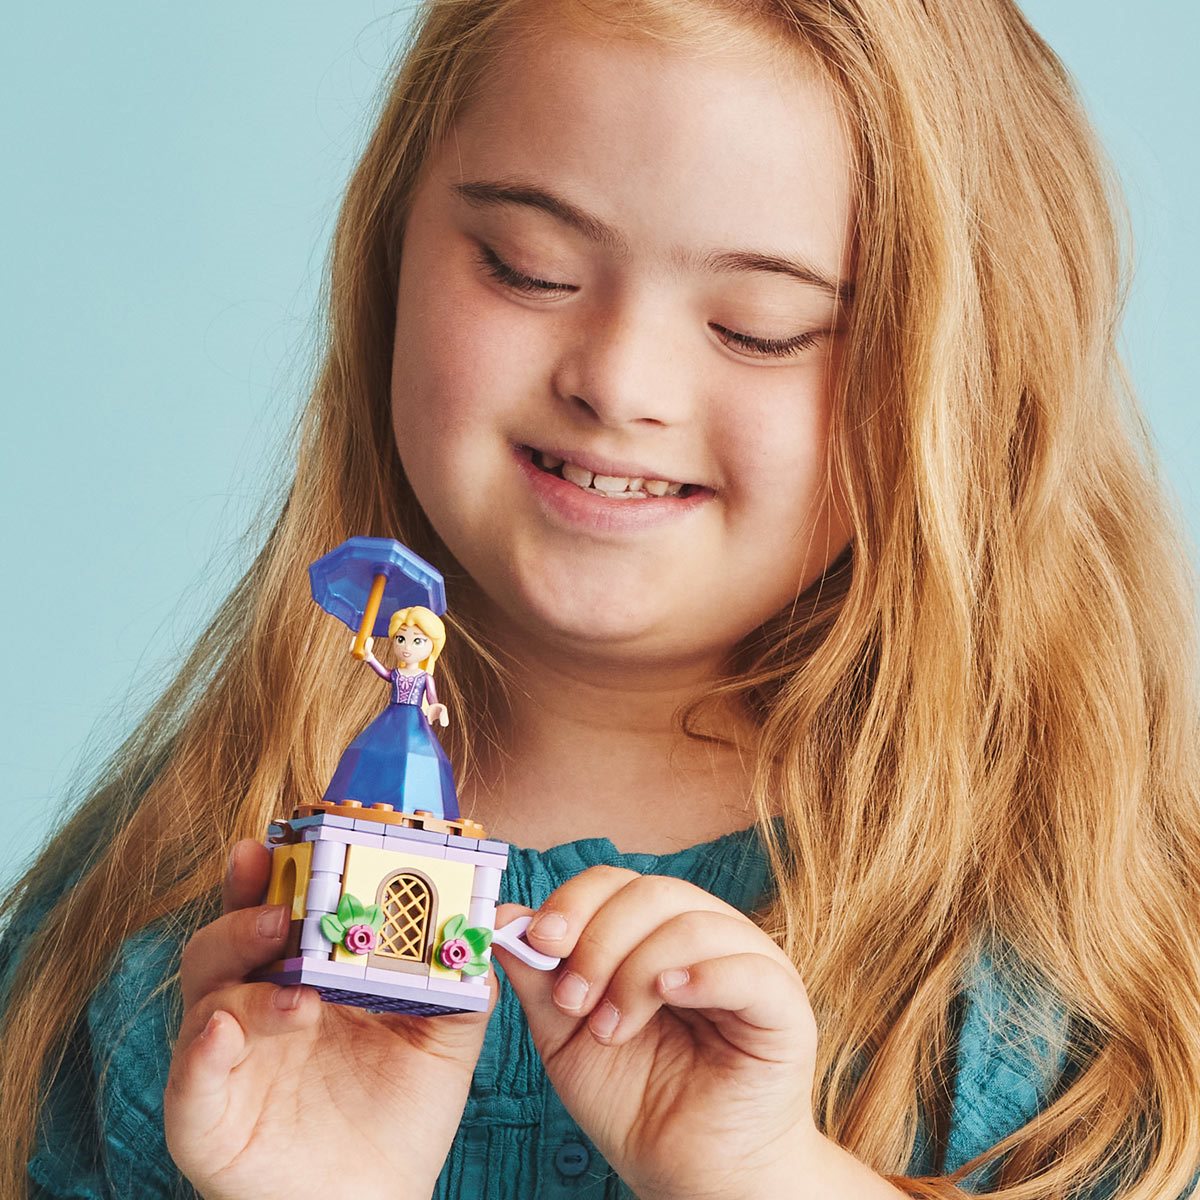  LEGO Disney Princess Minifigure - Rapunzel's Boat with